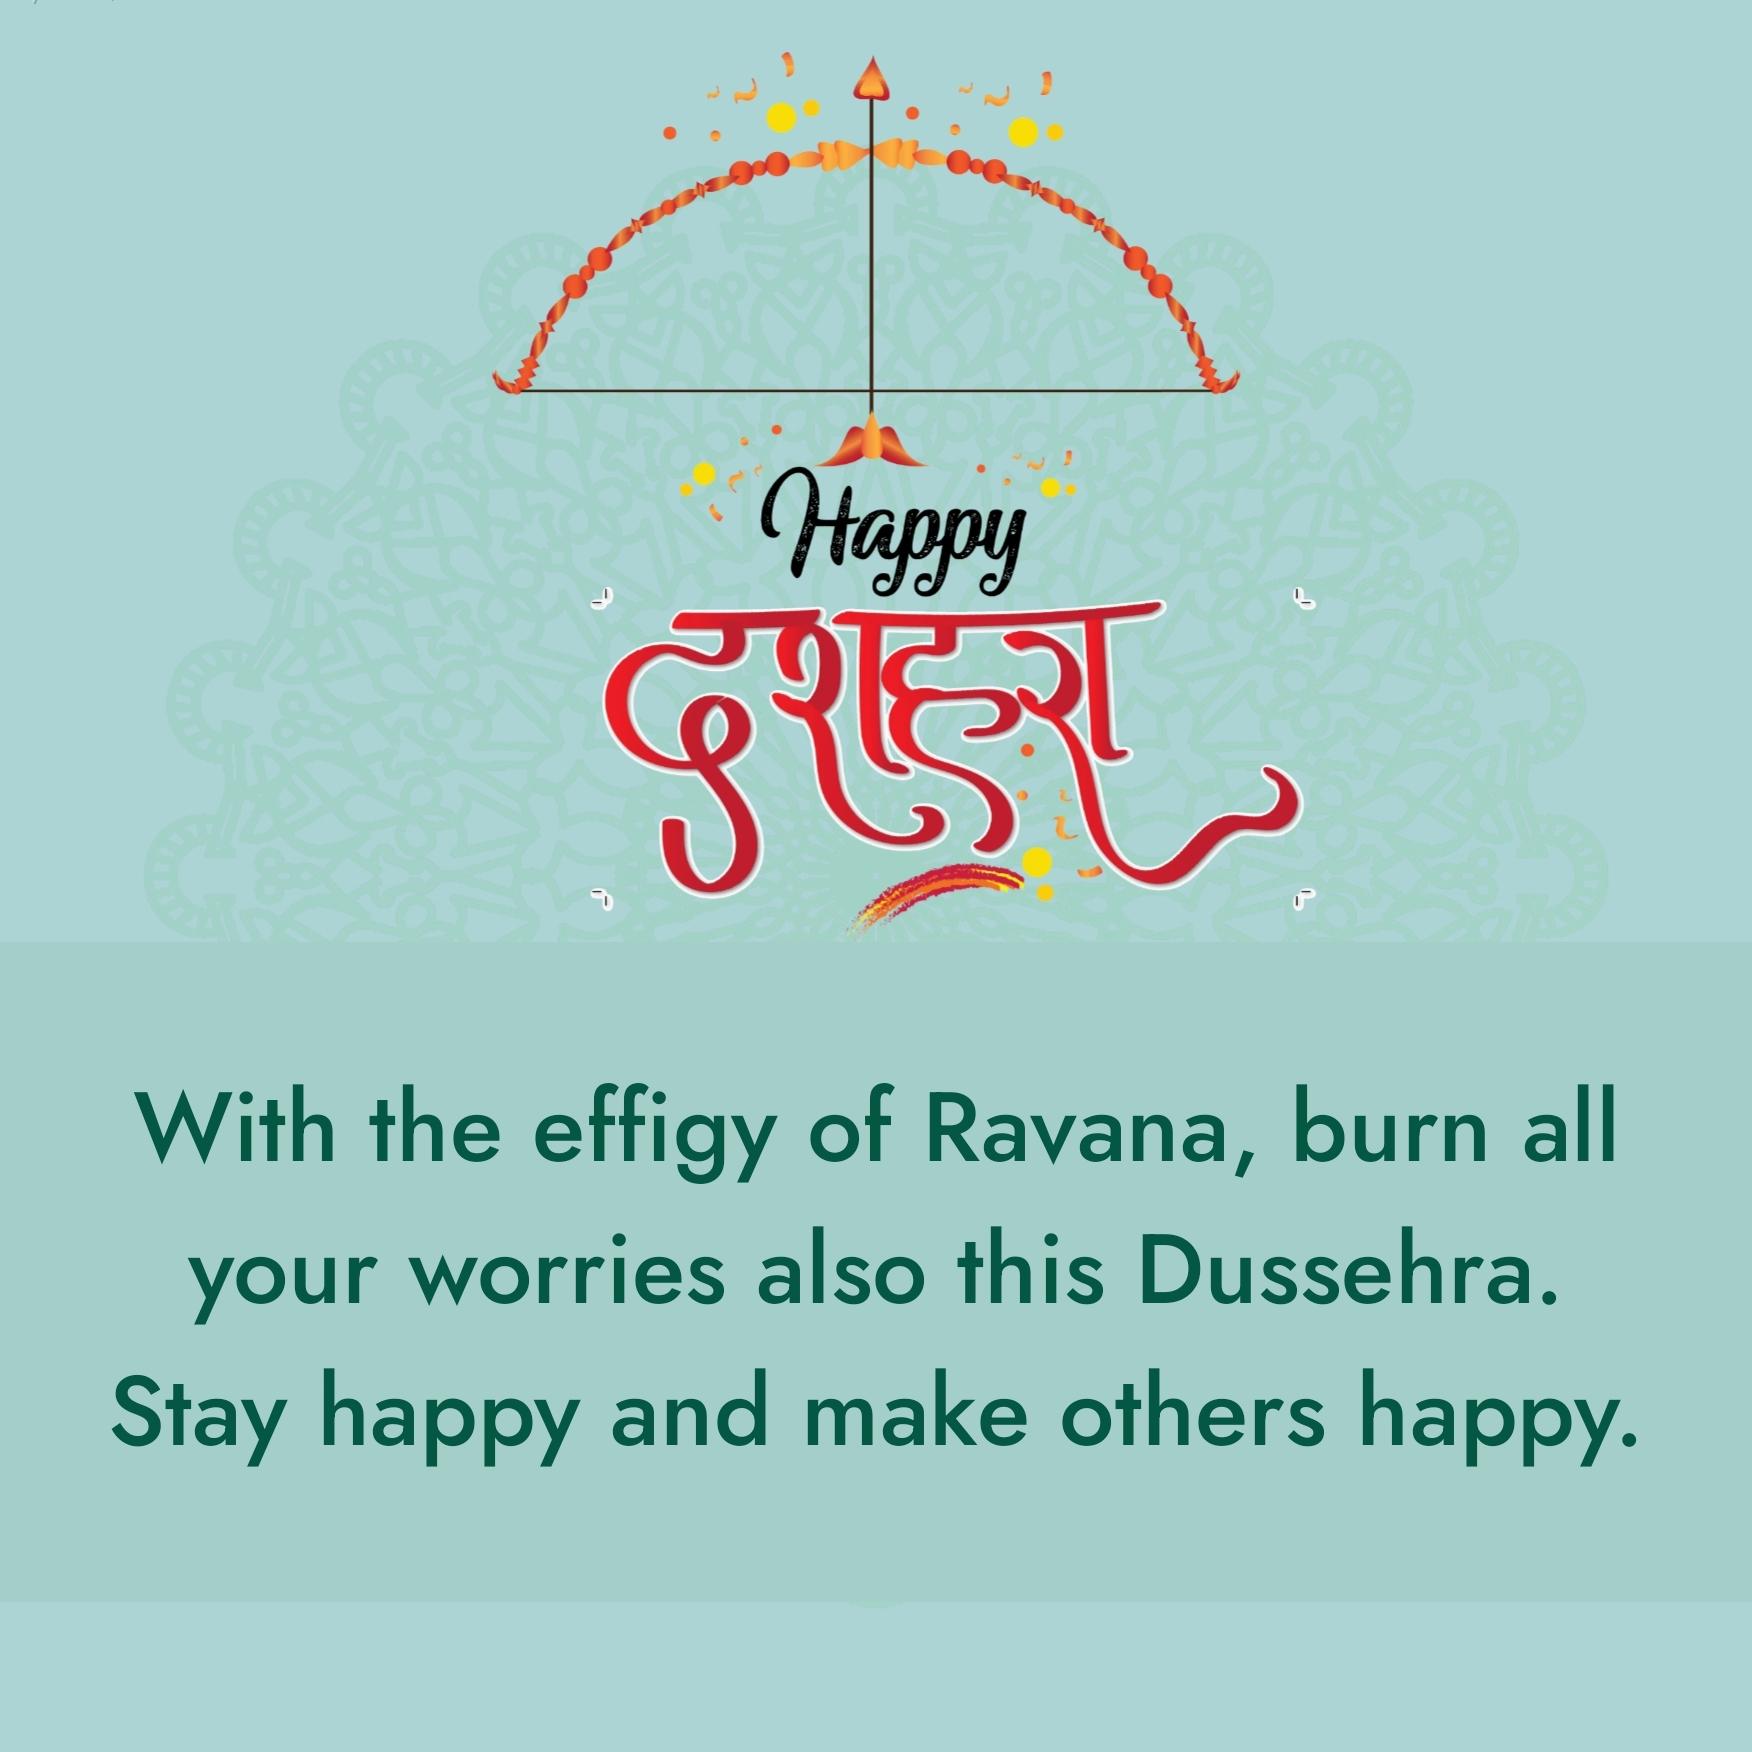 With the effigy of Ravana burn all your worries